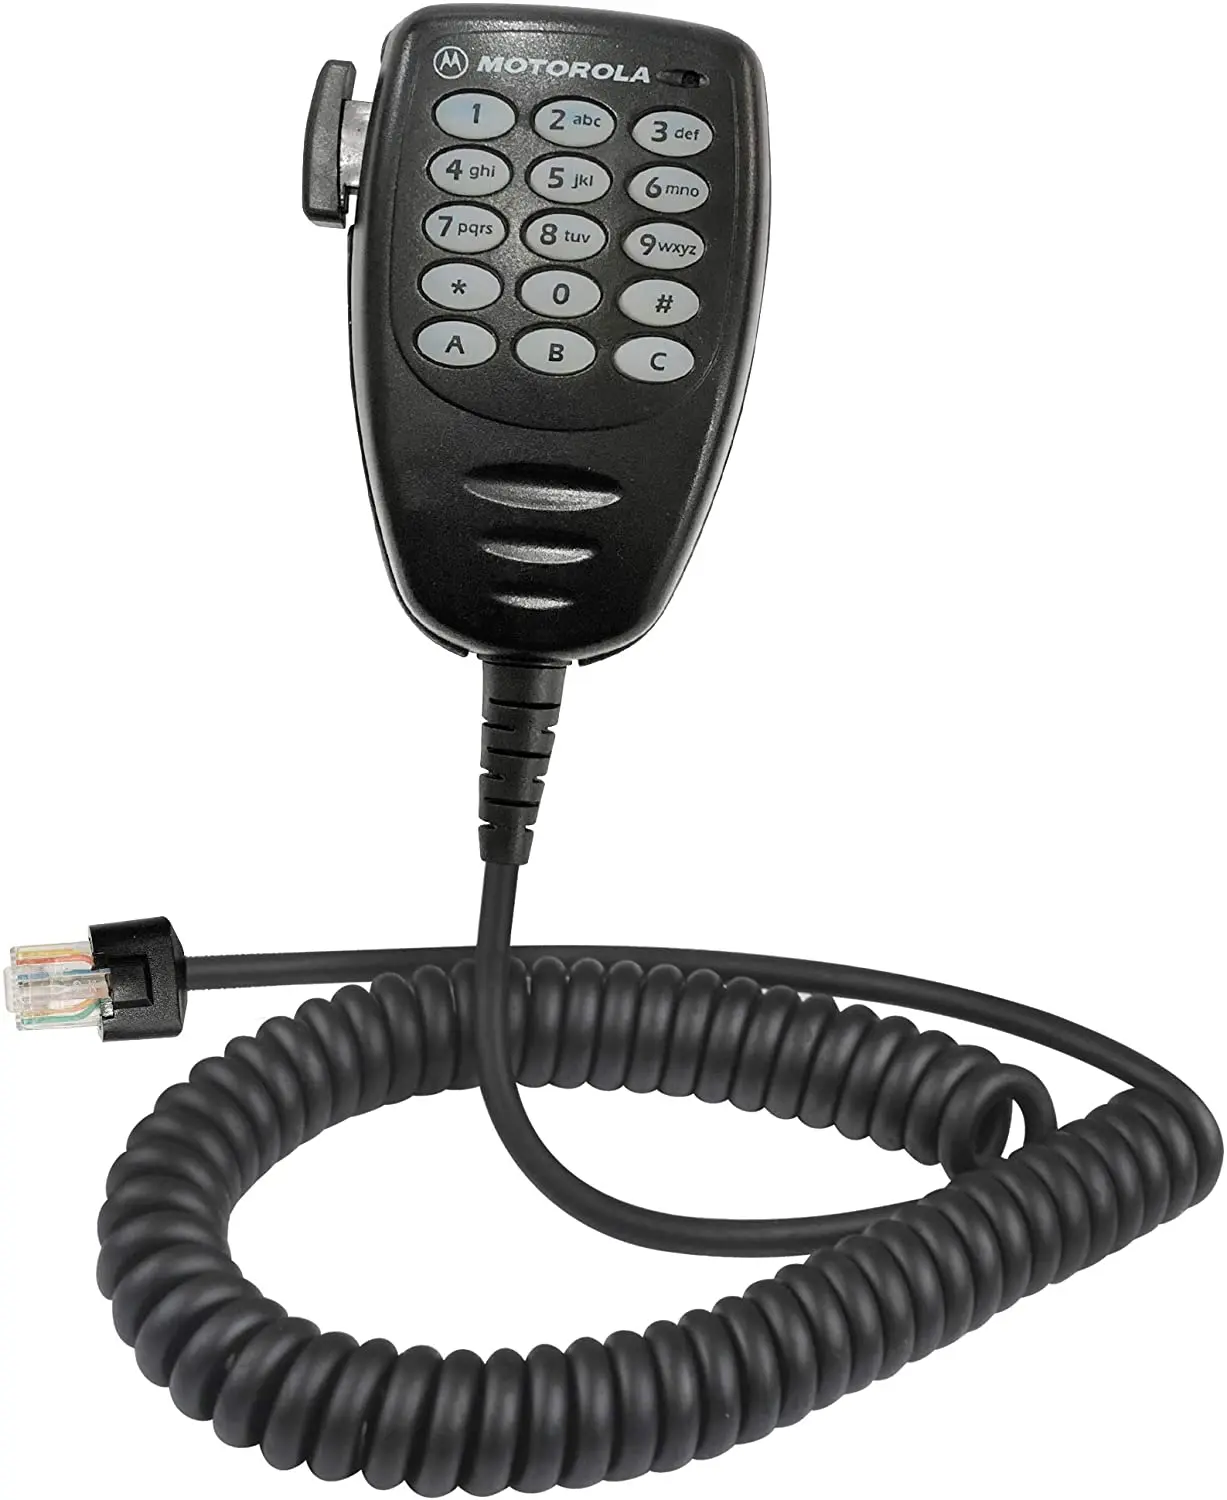 AARMN4026B Enhanced DTMF Keypad Microphone FOR Motorola CDM1550 CDM750 GM338 